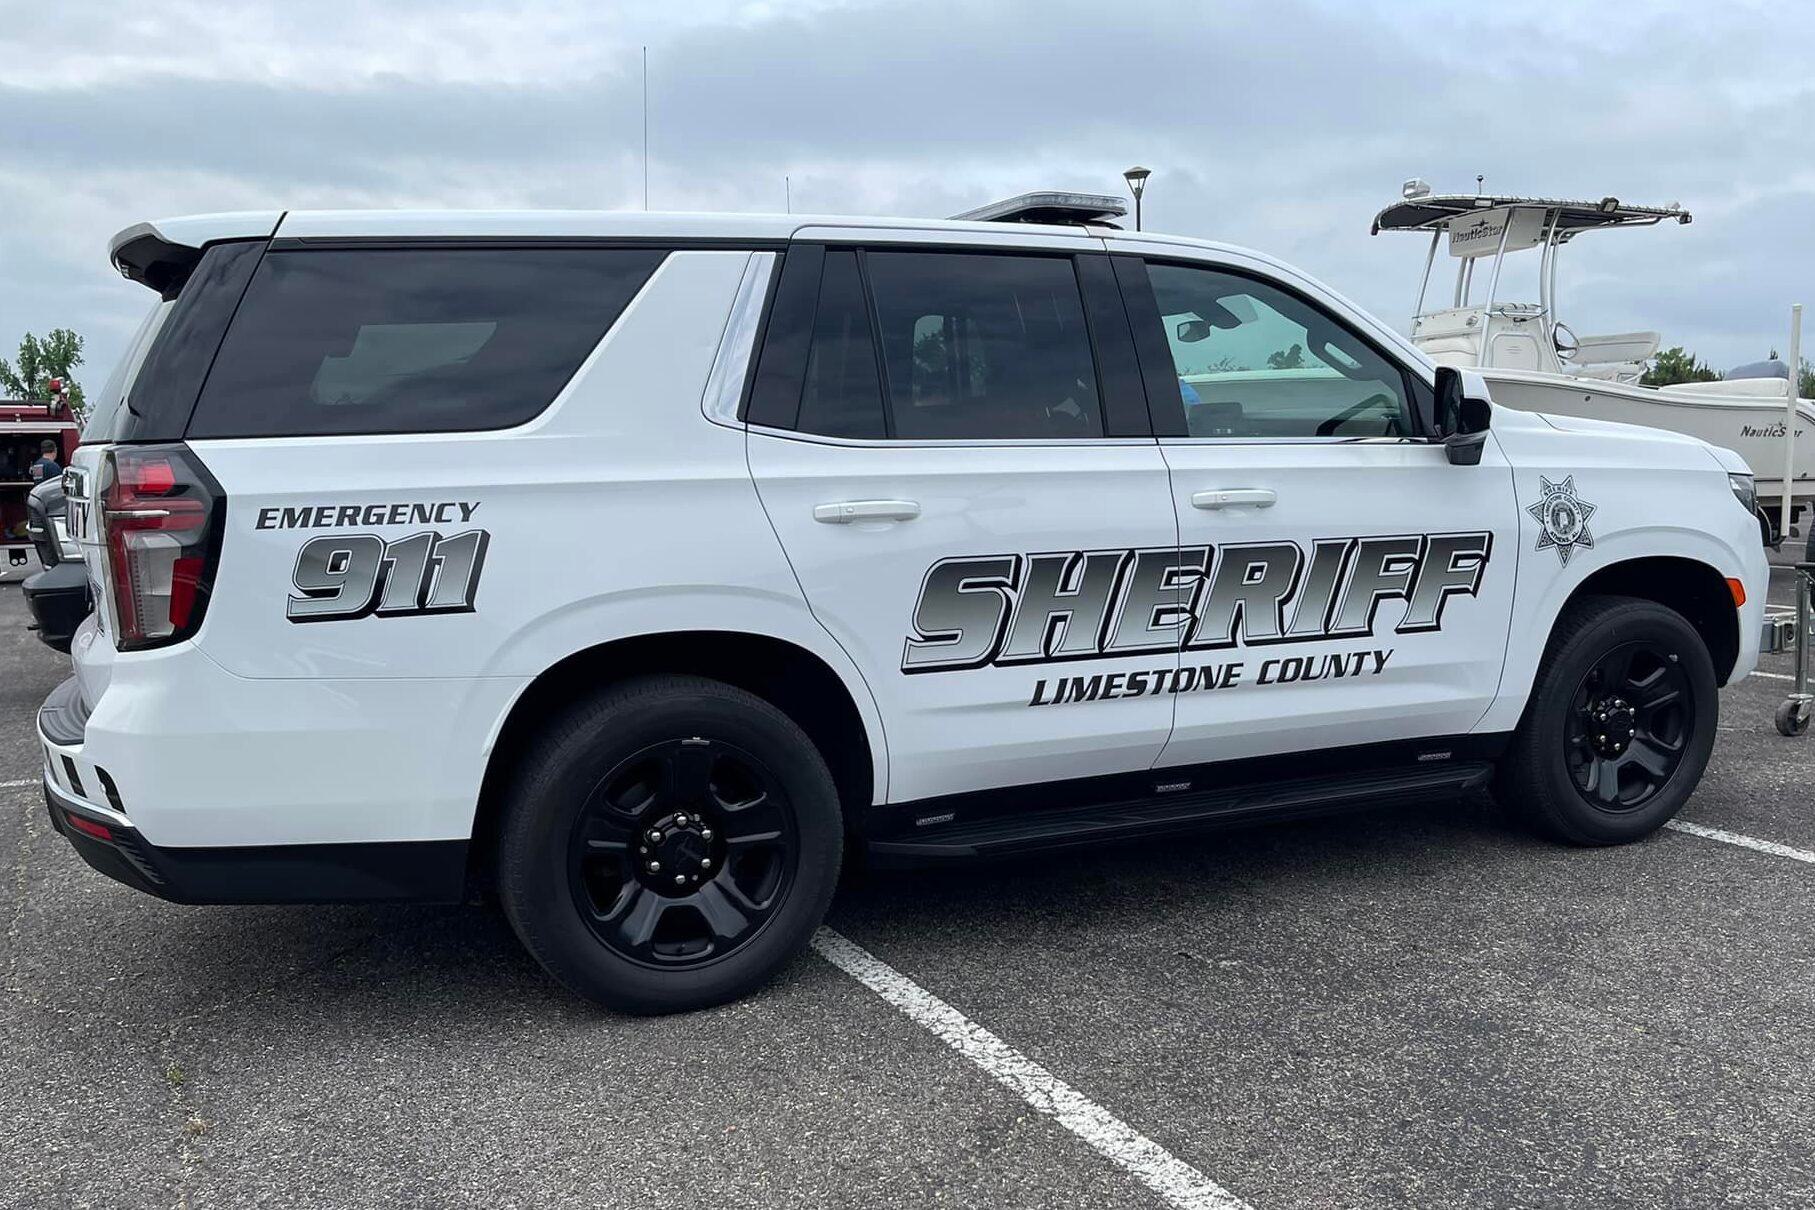 Limestone County Sheriff vehicle